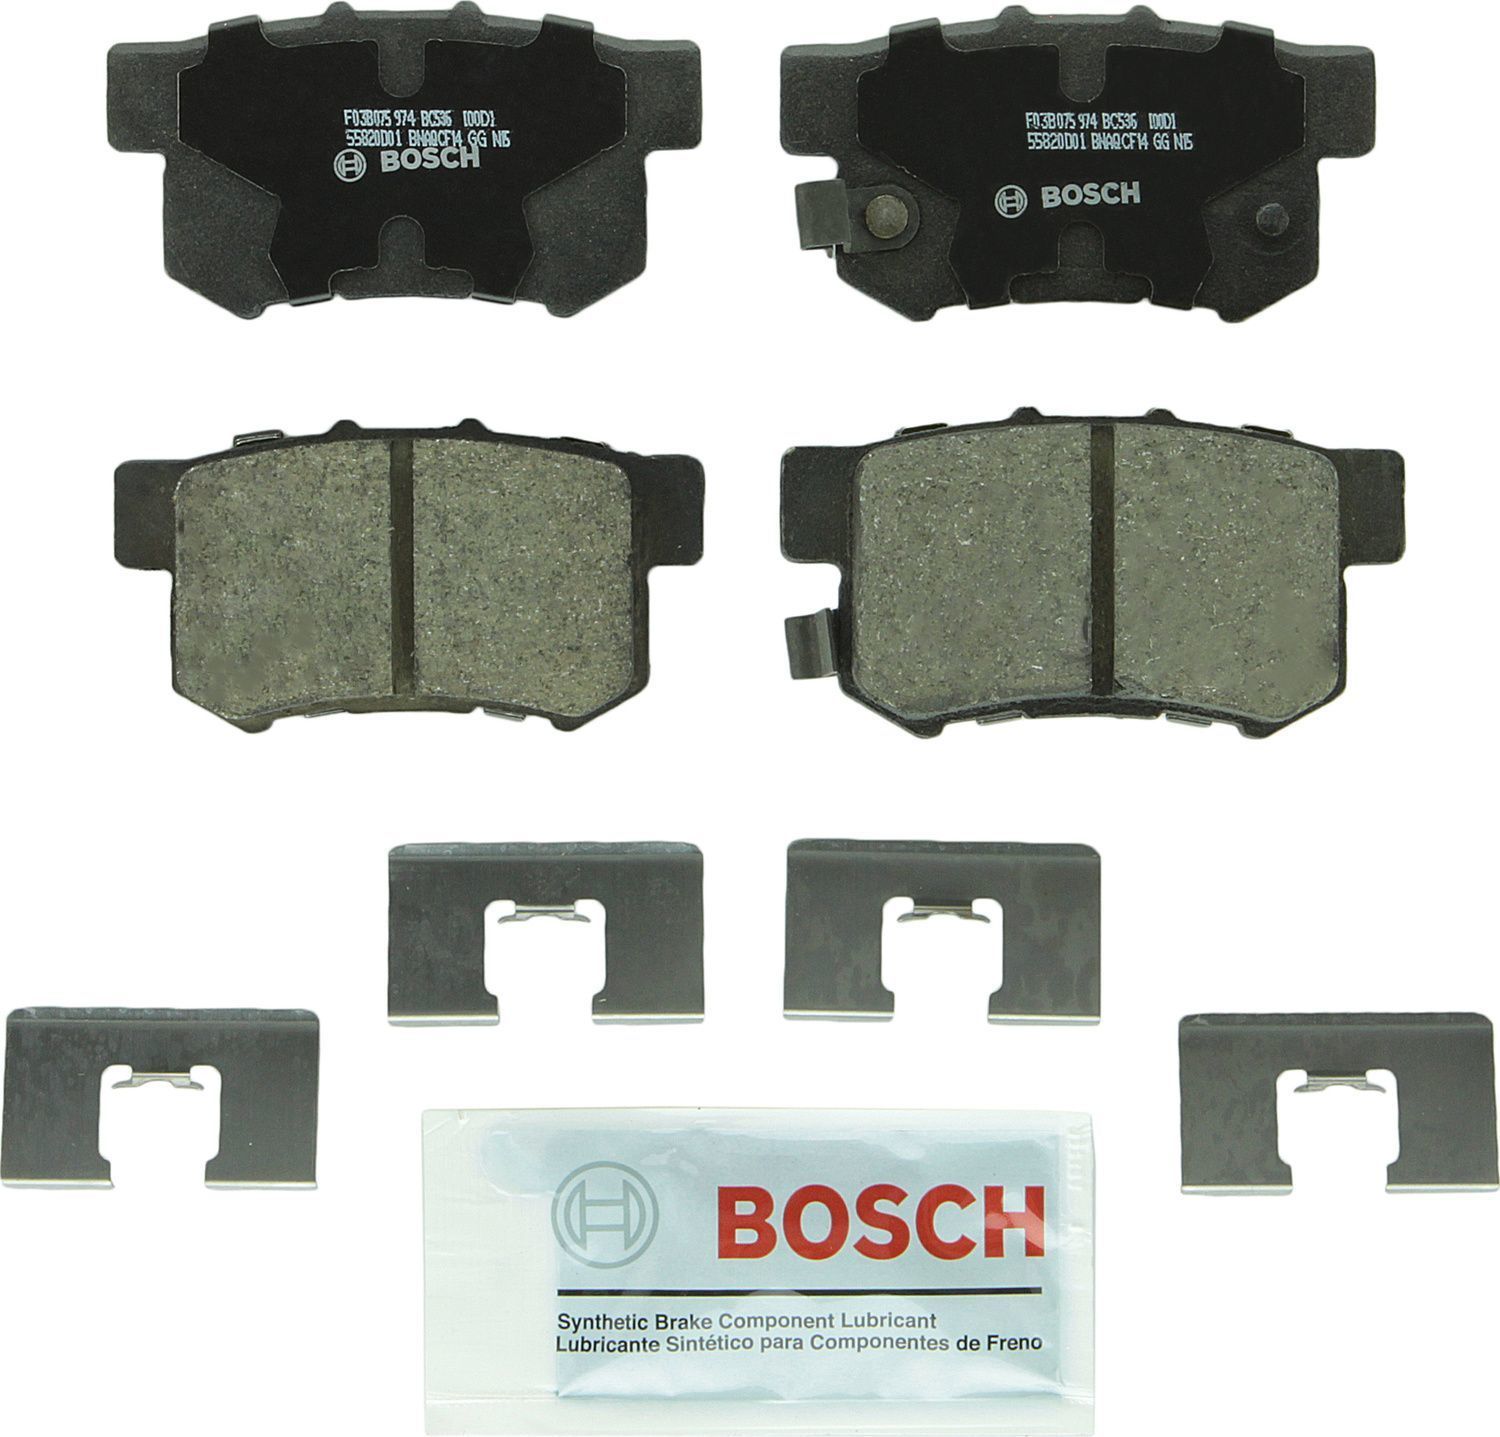 BOSCH BRAKE - Bosch QuietCast Brake Pad Ceramic Brake Pads (Rear) - BQC BC536